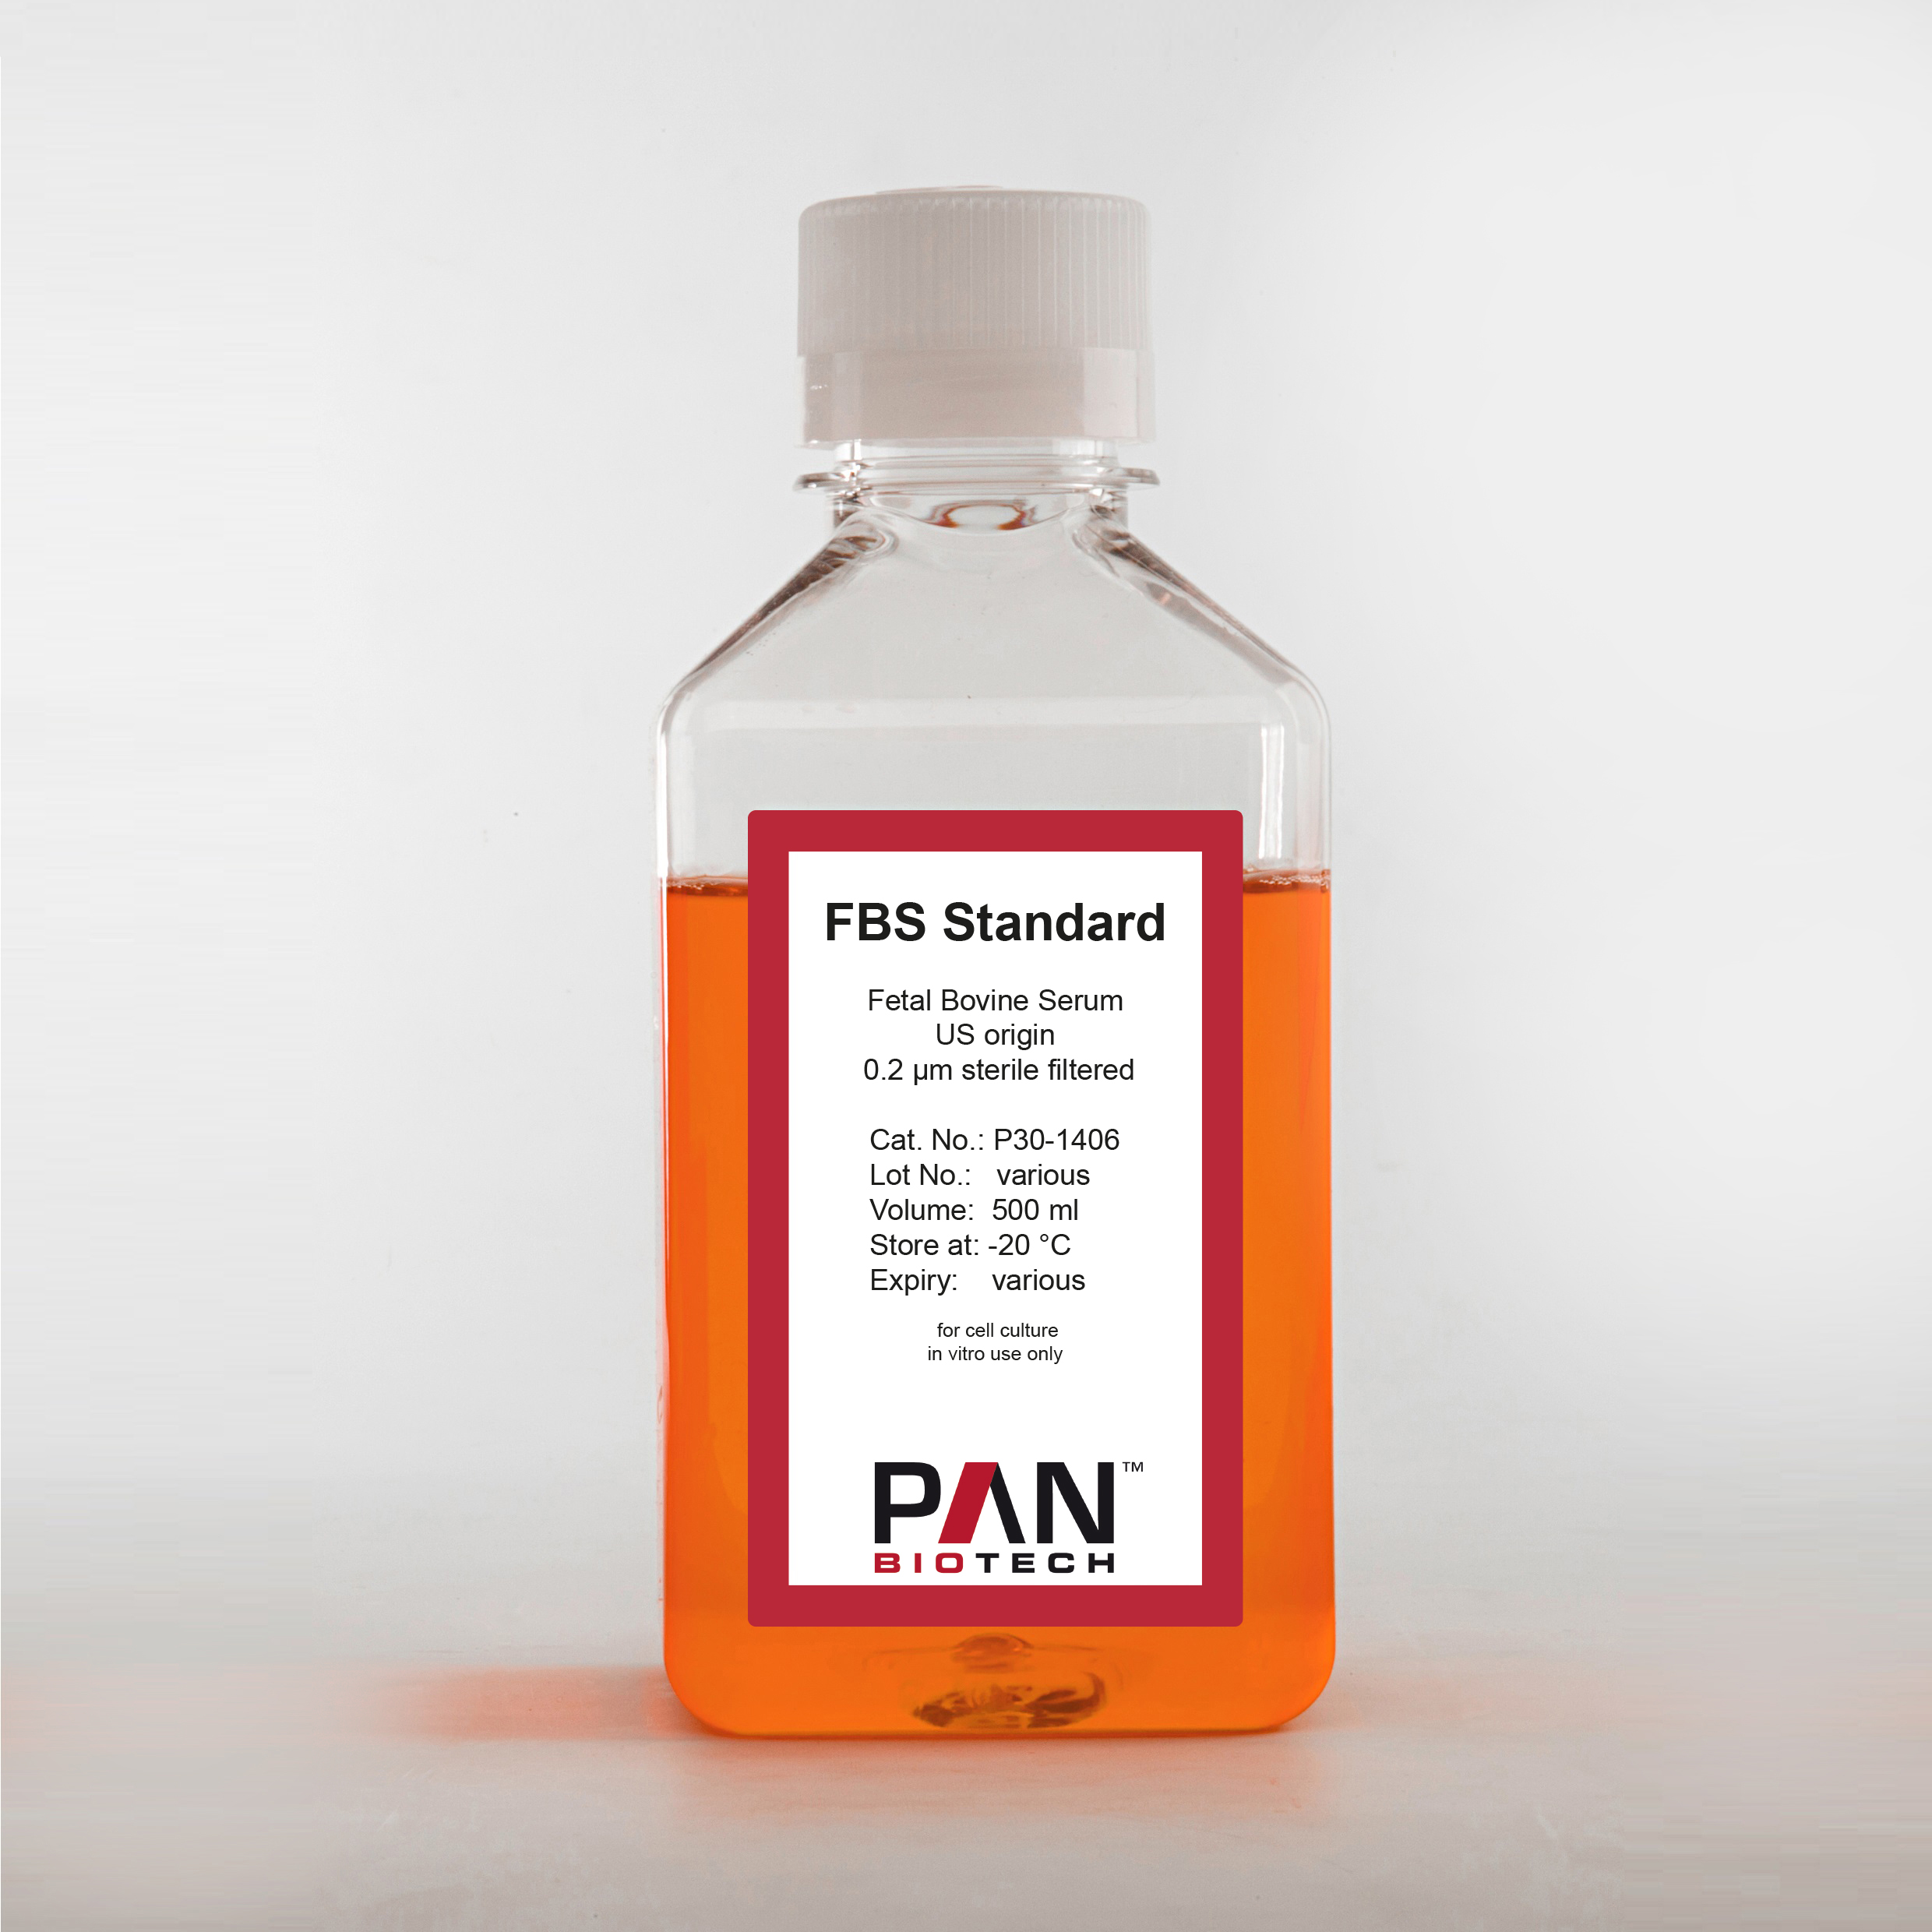 FBS Standard, US origin, fetal bovine serum, 0.2 µm sterile filtered